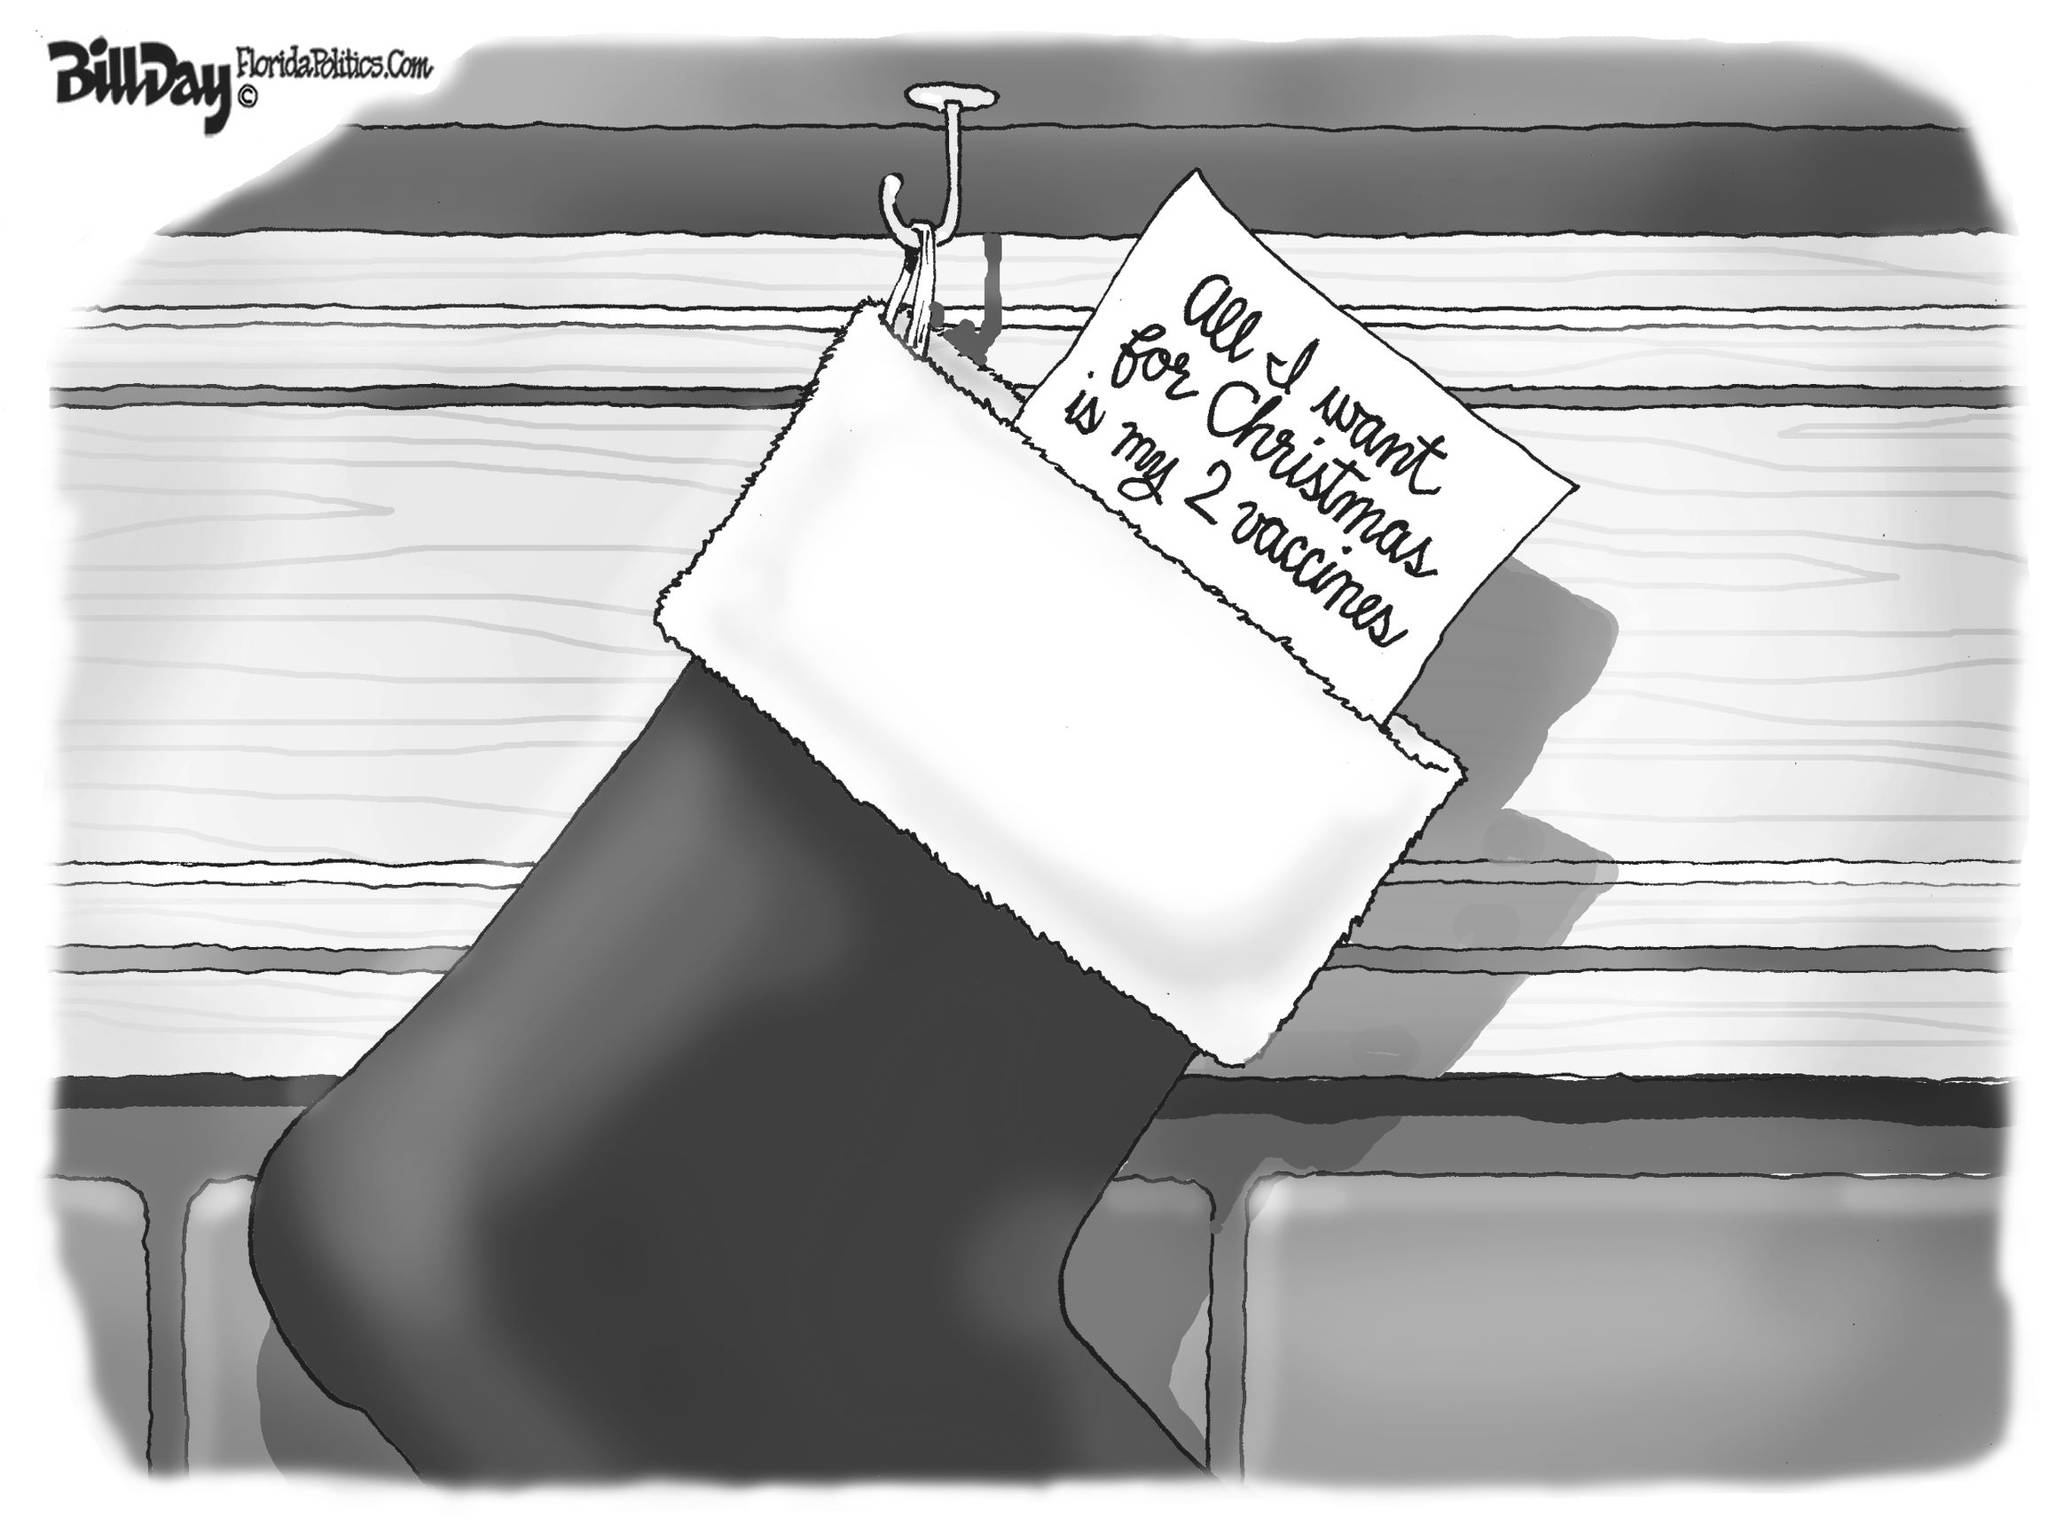 Bill Day, CagleCartoons.com